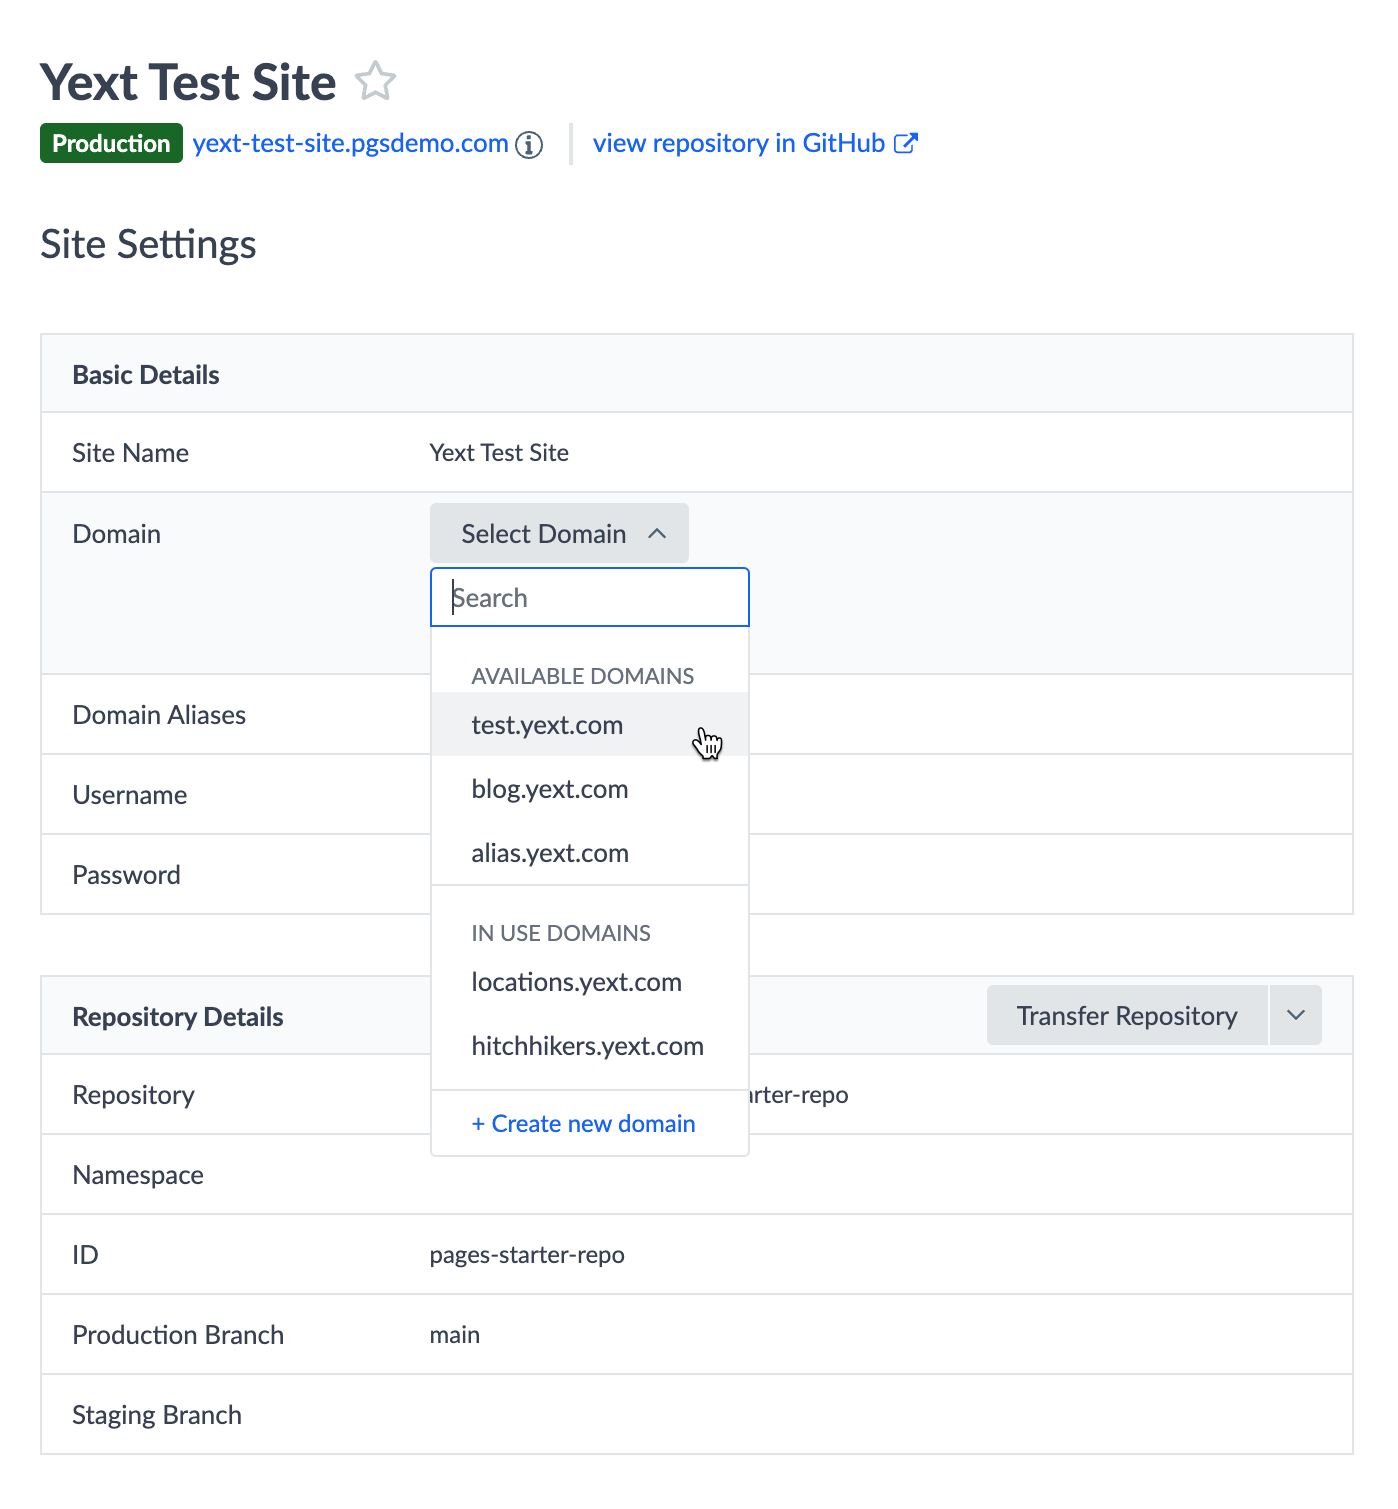 domains list under site settings